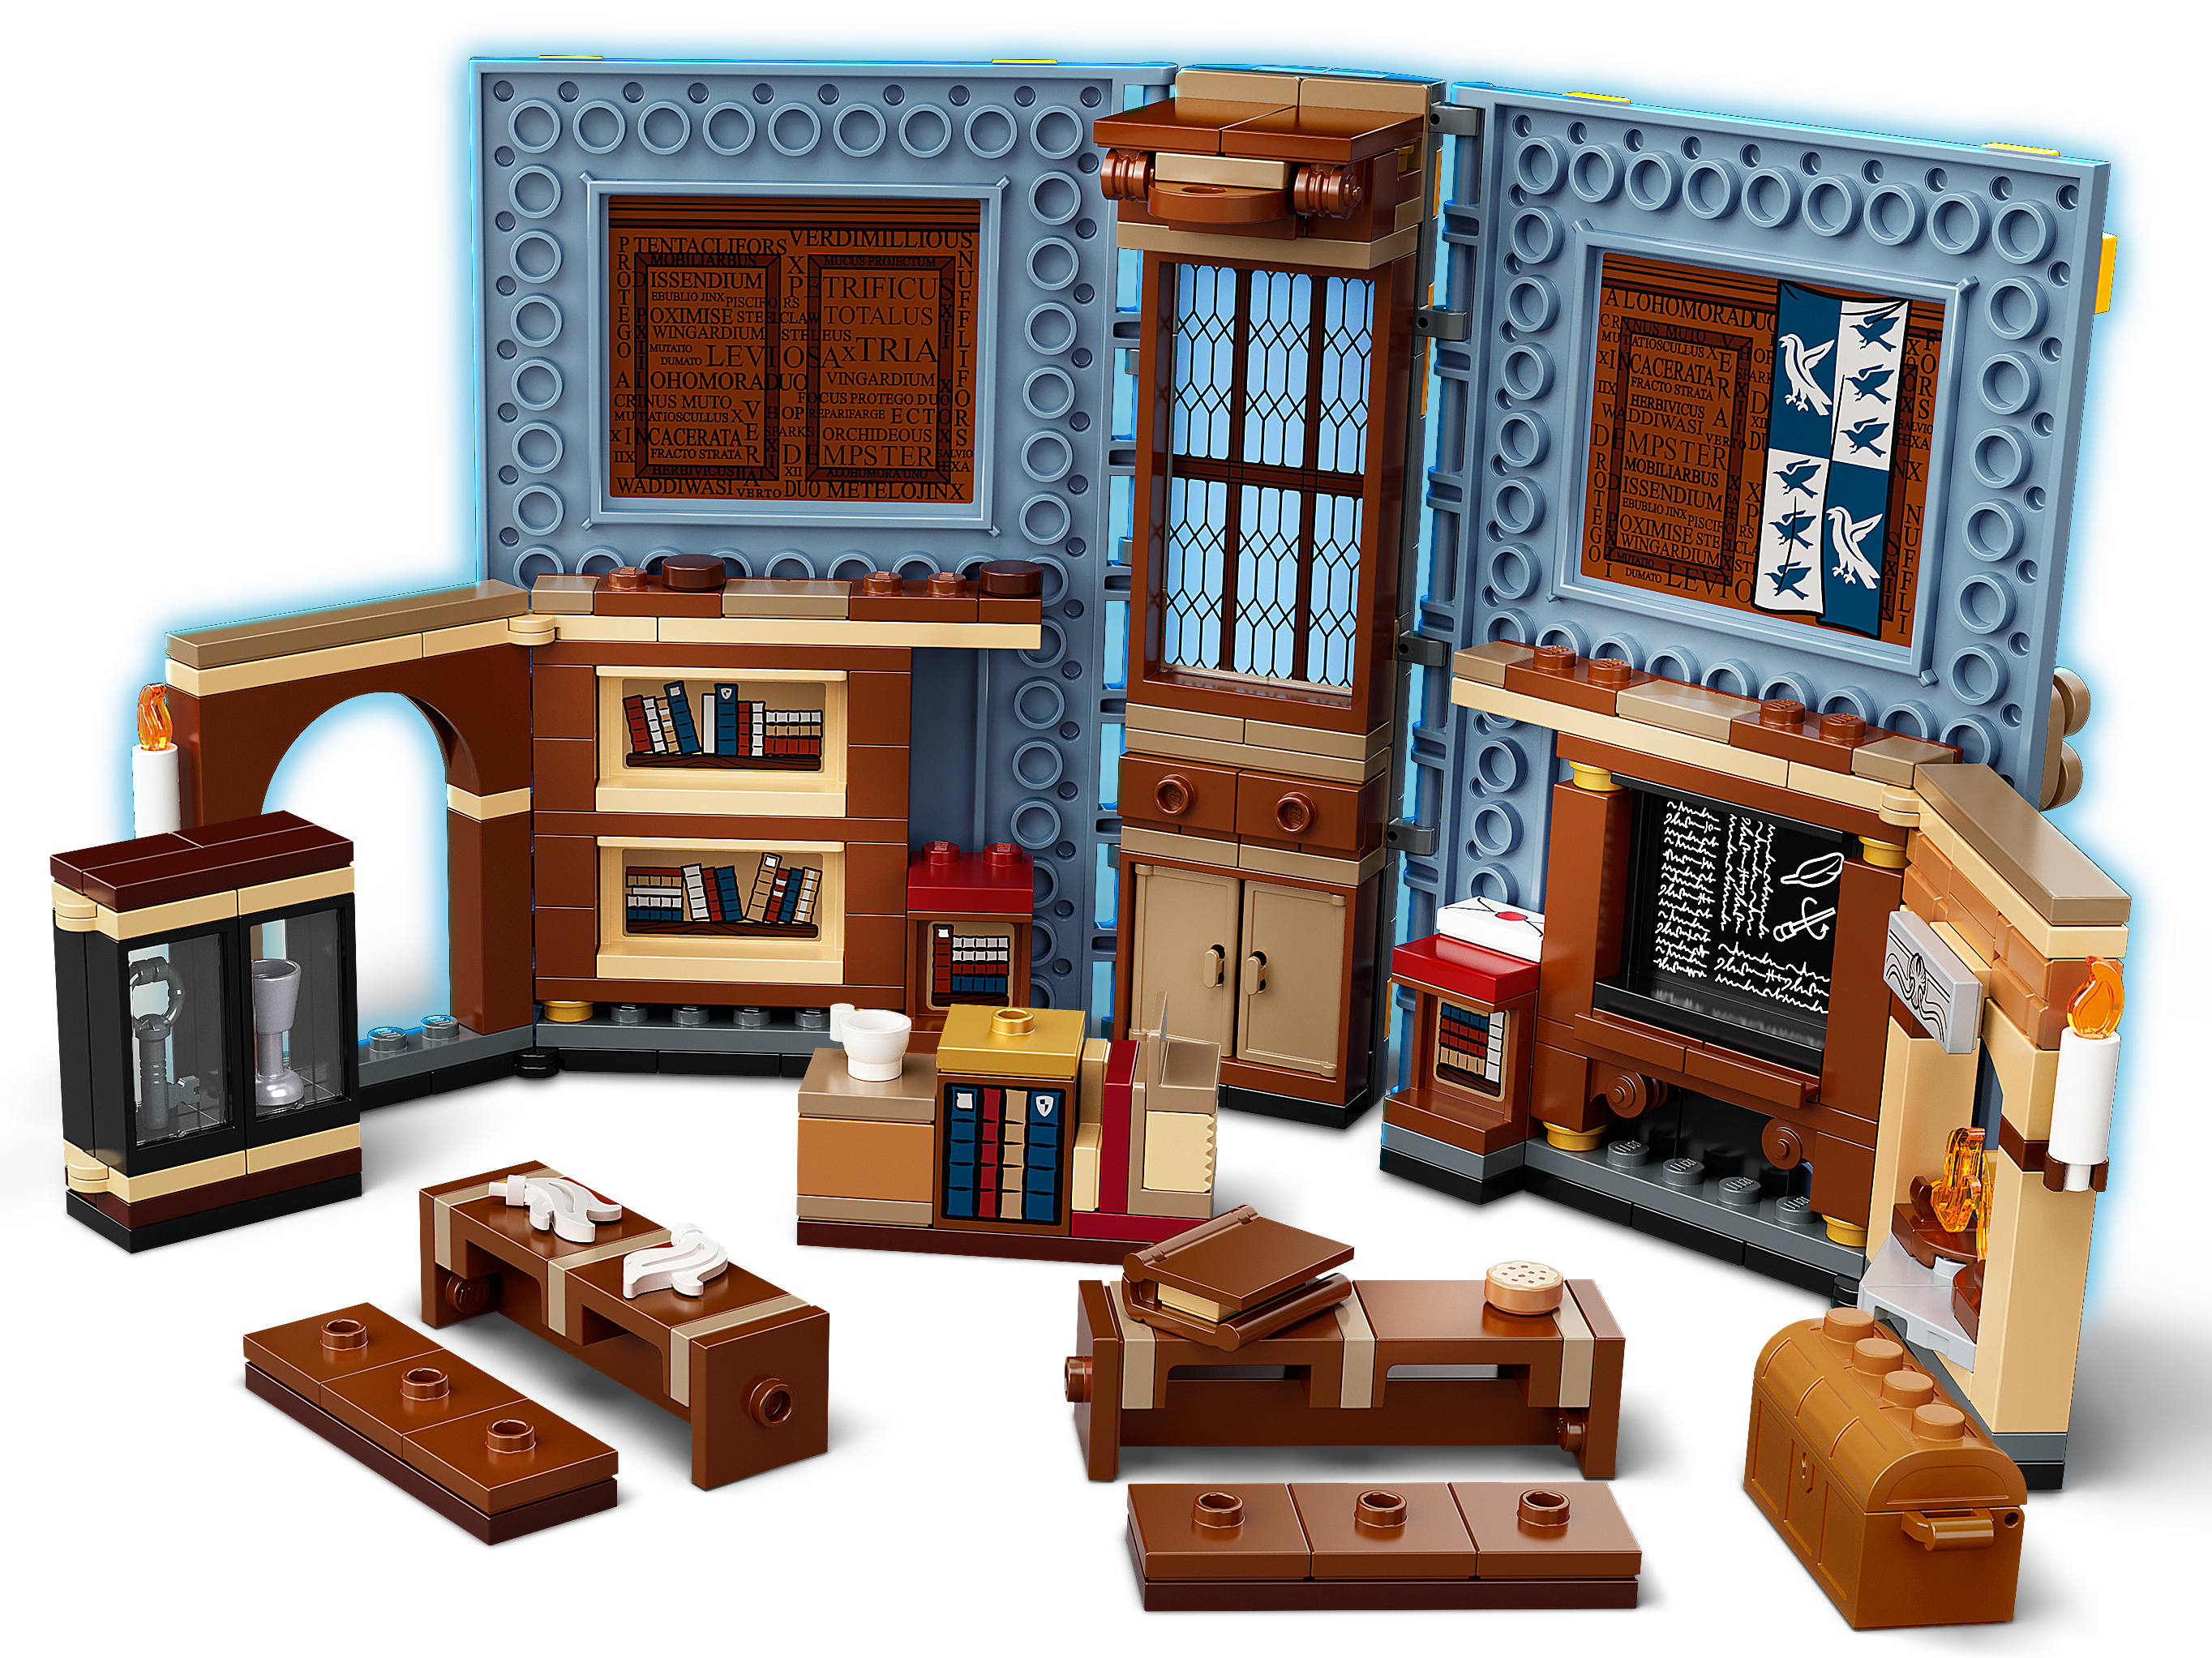 Lego Momento De Hogwarts: Aula De Feitiços Harry Potter 76385 Colorido